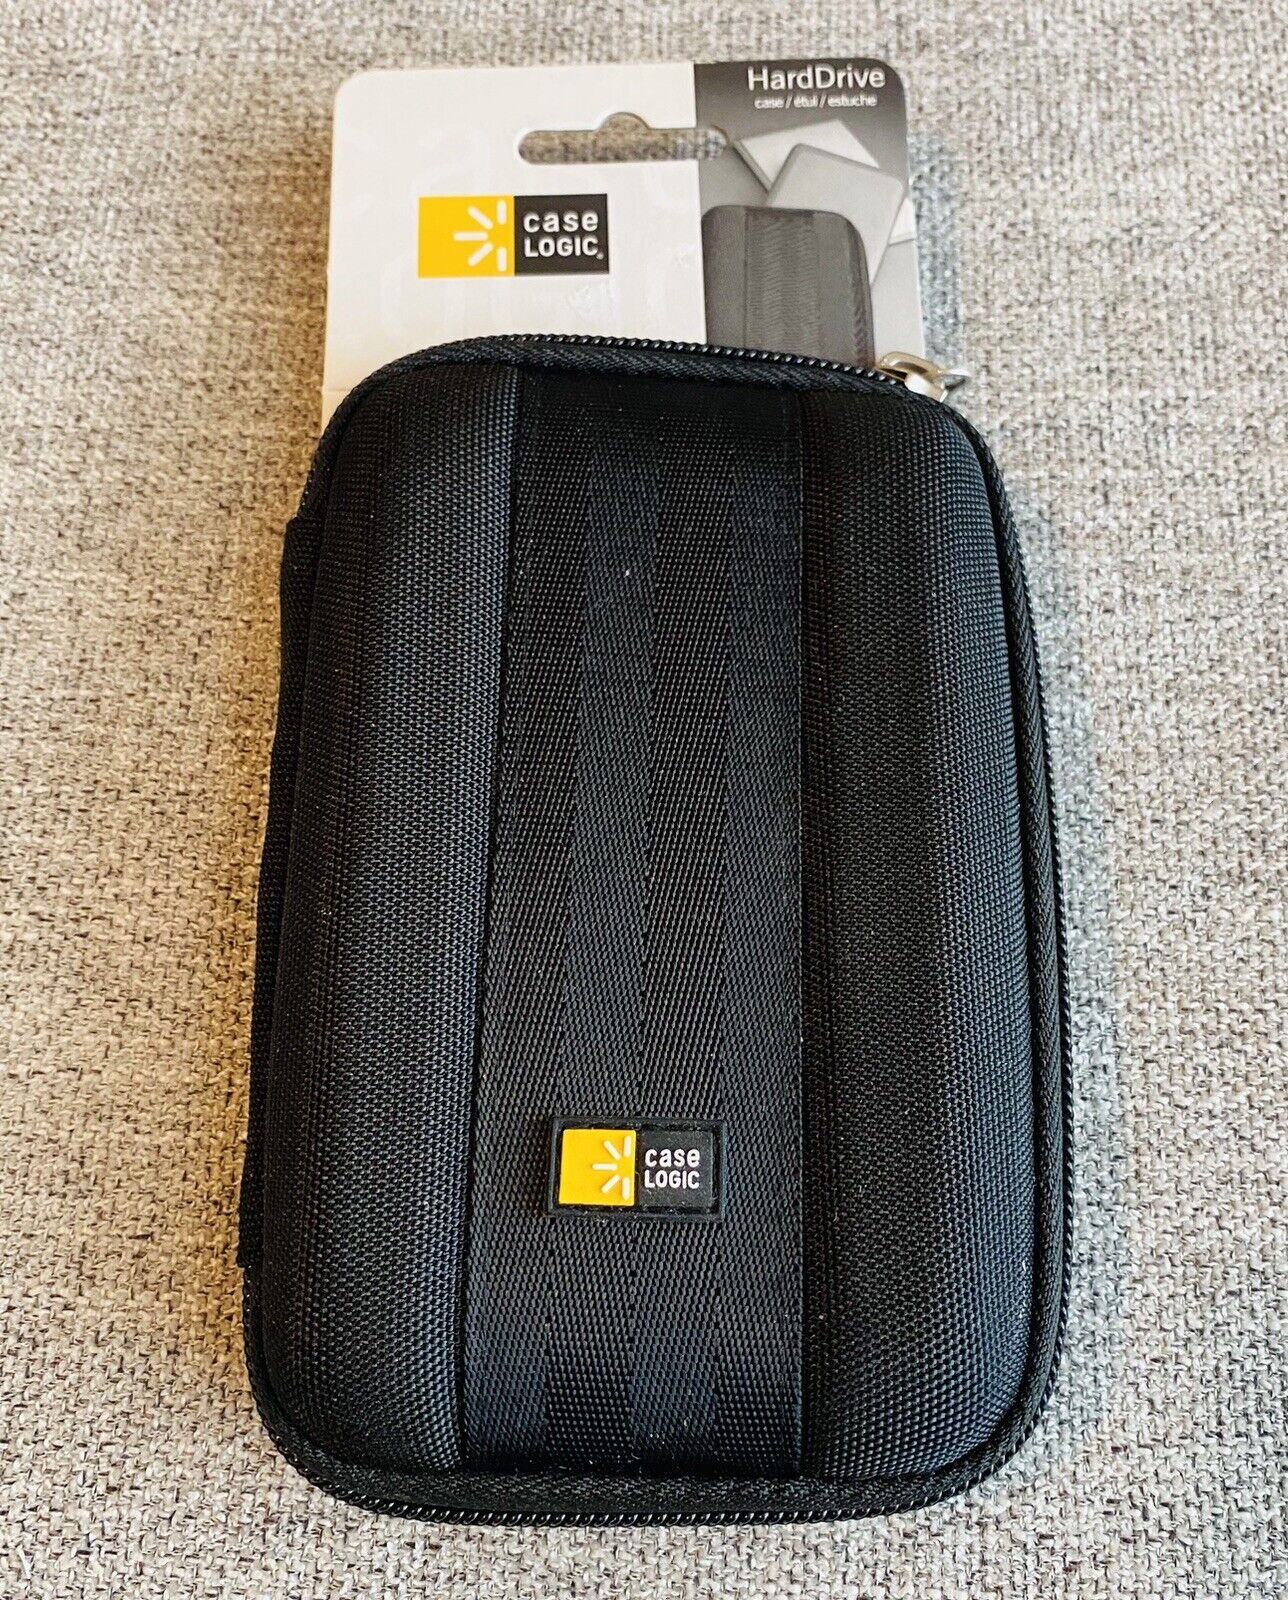 New Case Logic Portable Hard Drive Case Black Protector 